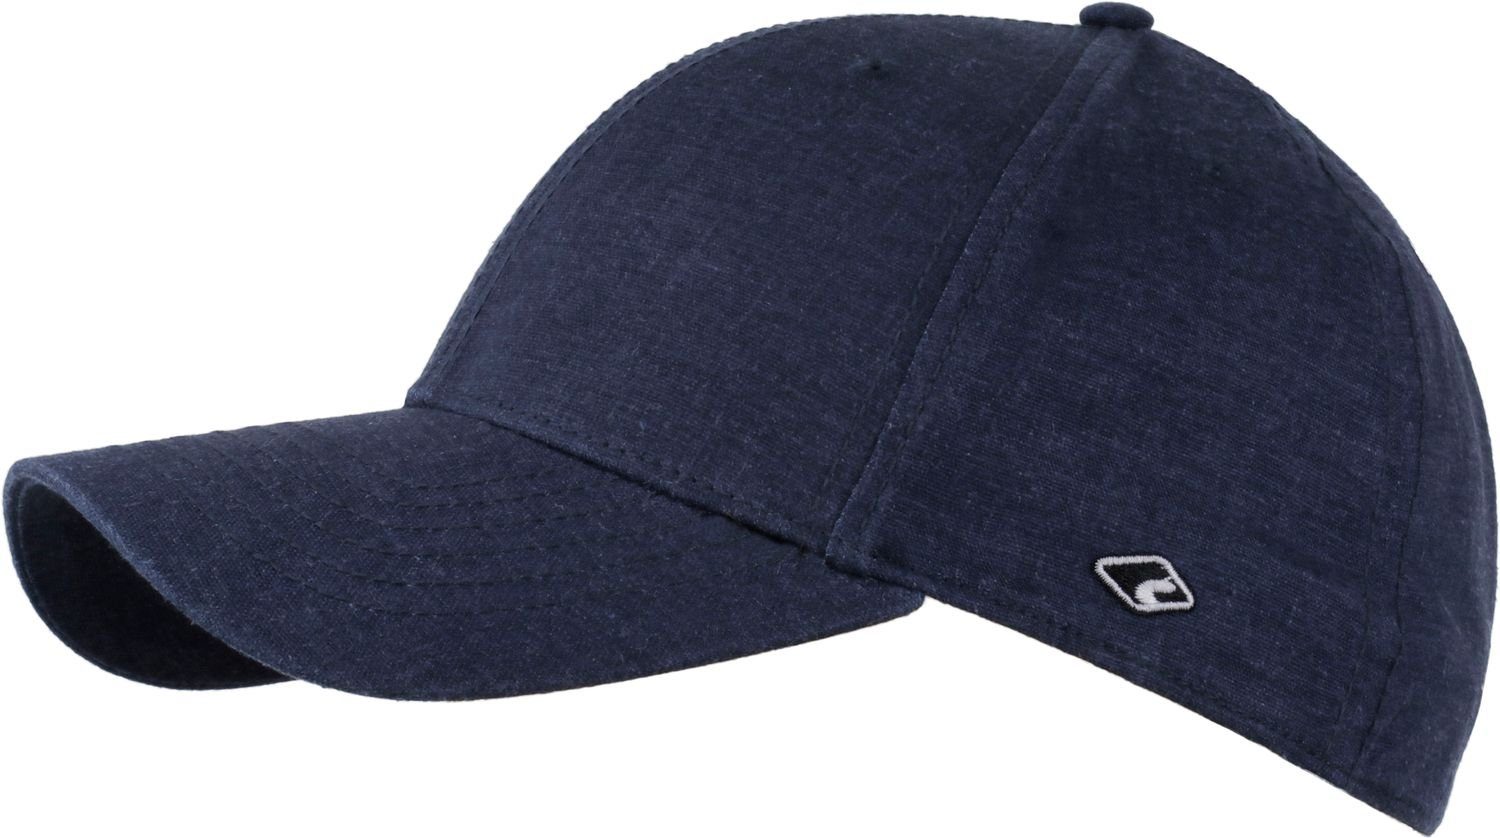 Leinen Caps online kaufen | OTTO | Baseball Caps